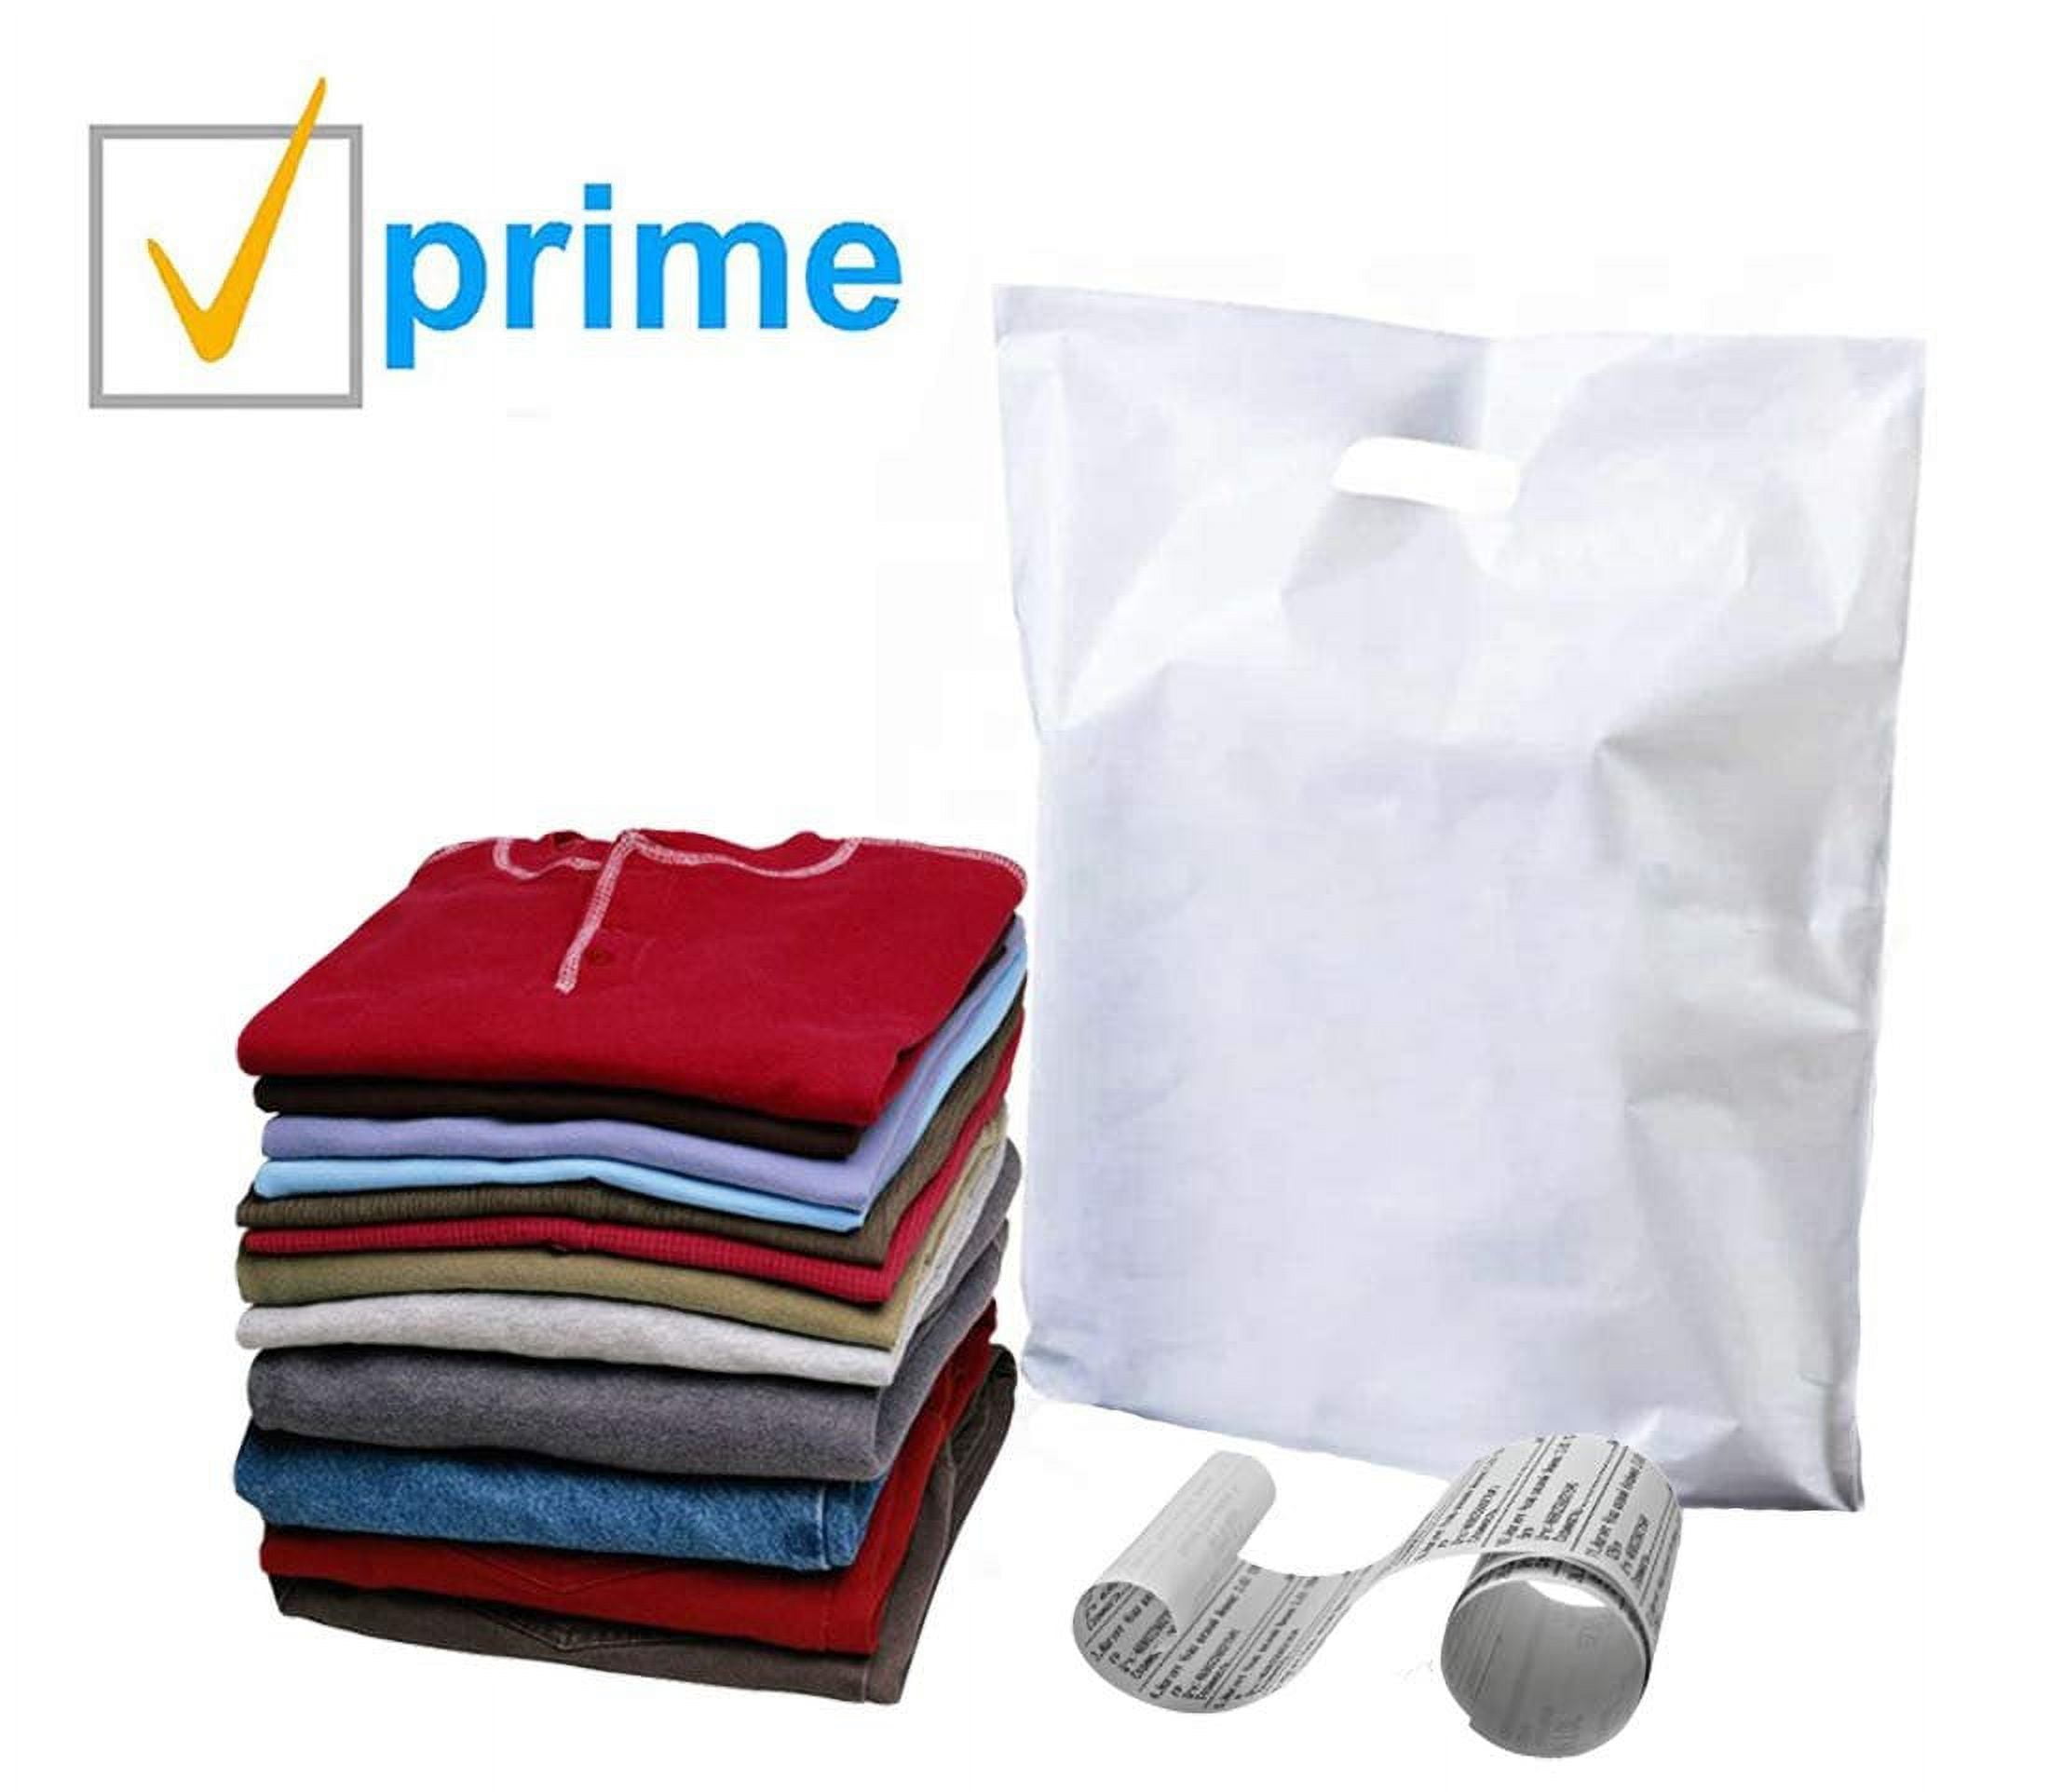 Large Plastic Retail Bags - 20 x 10 x 30, 1.6 Mil [CHB5]